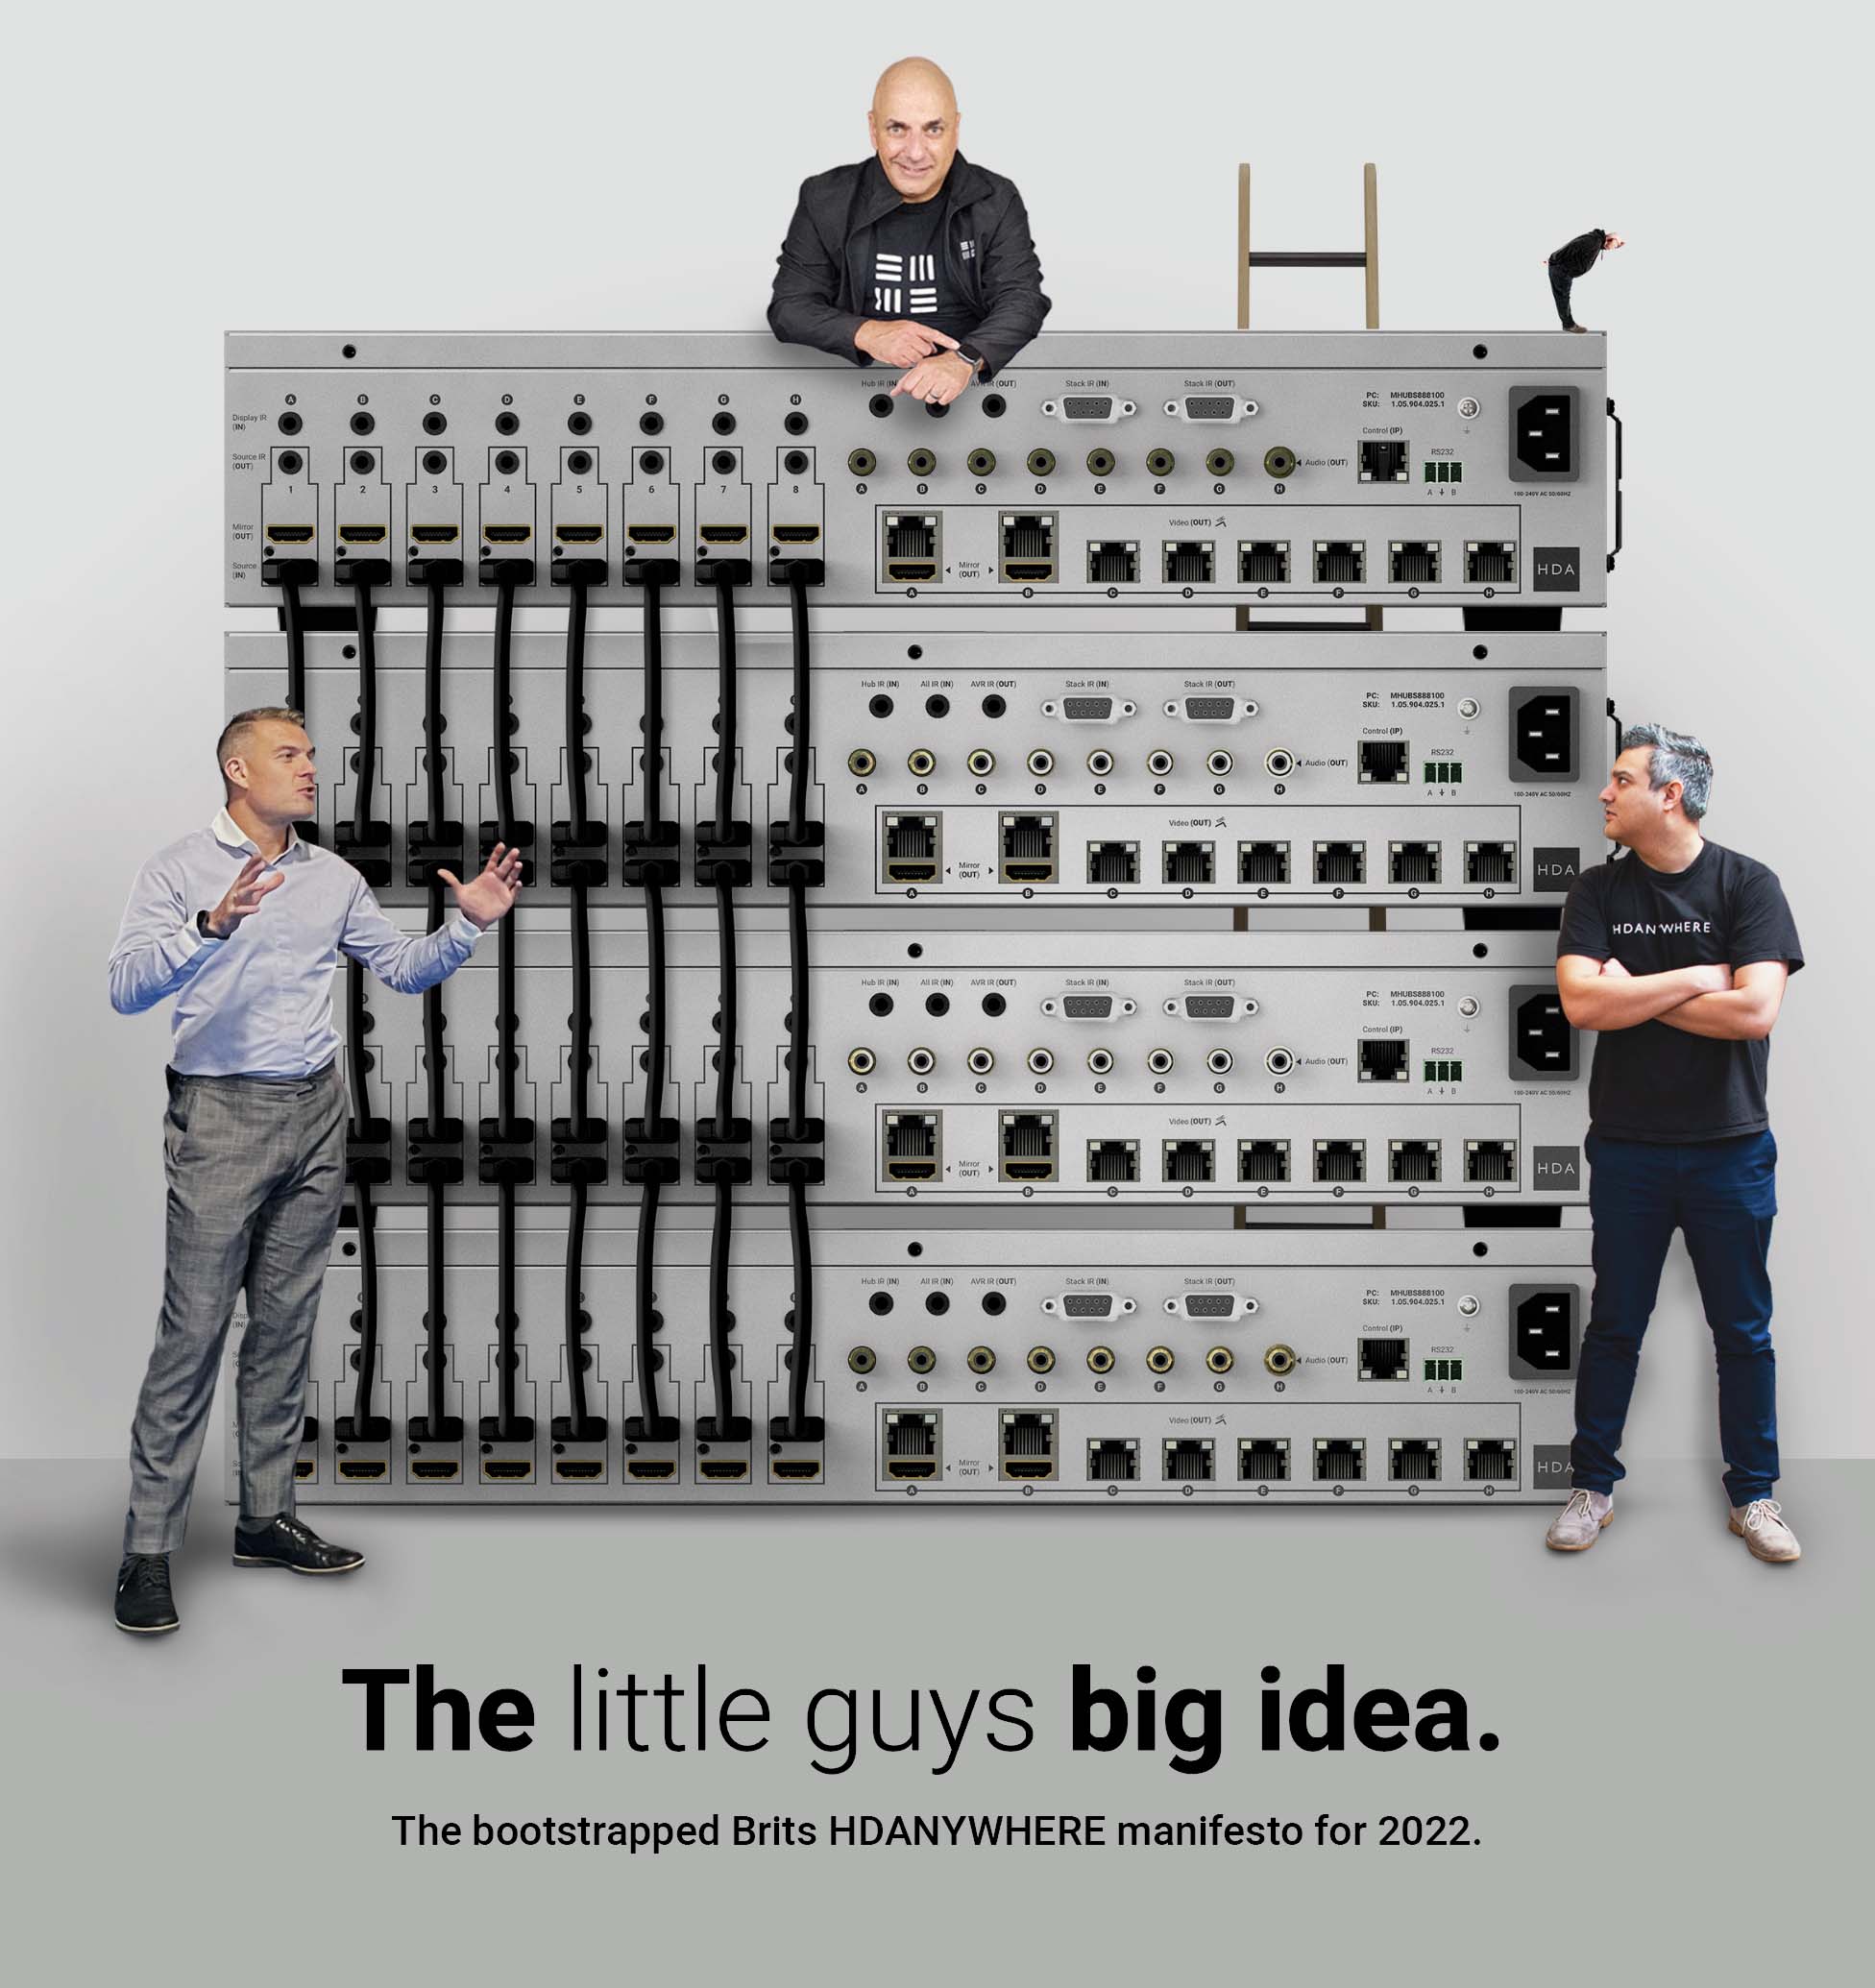 The little guys' big idea